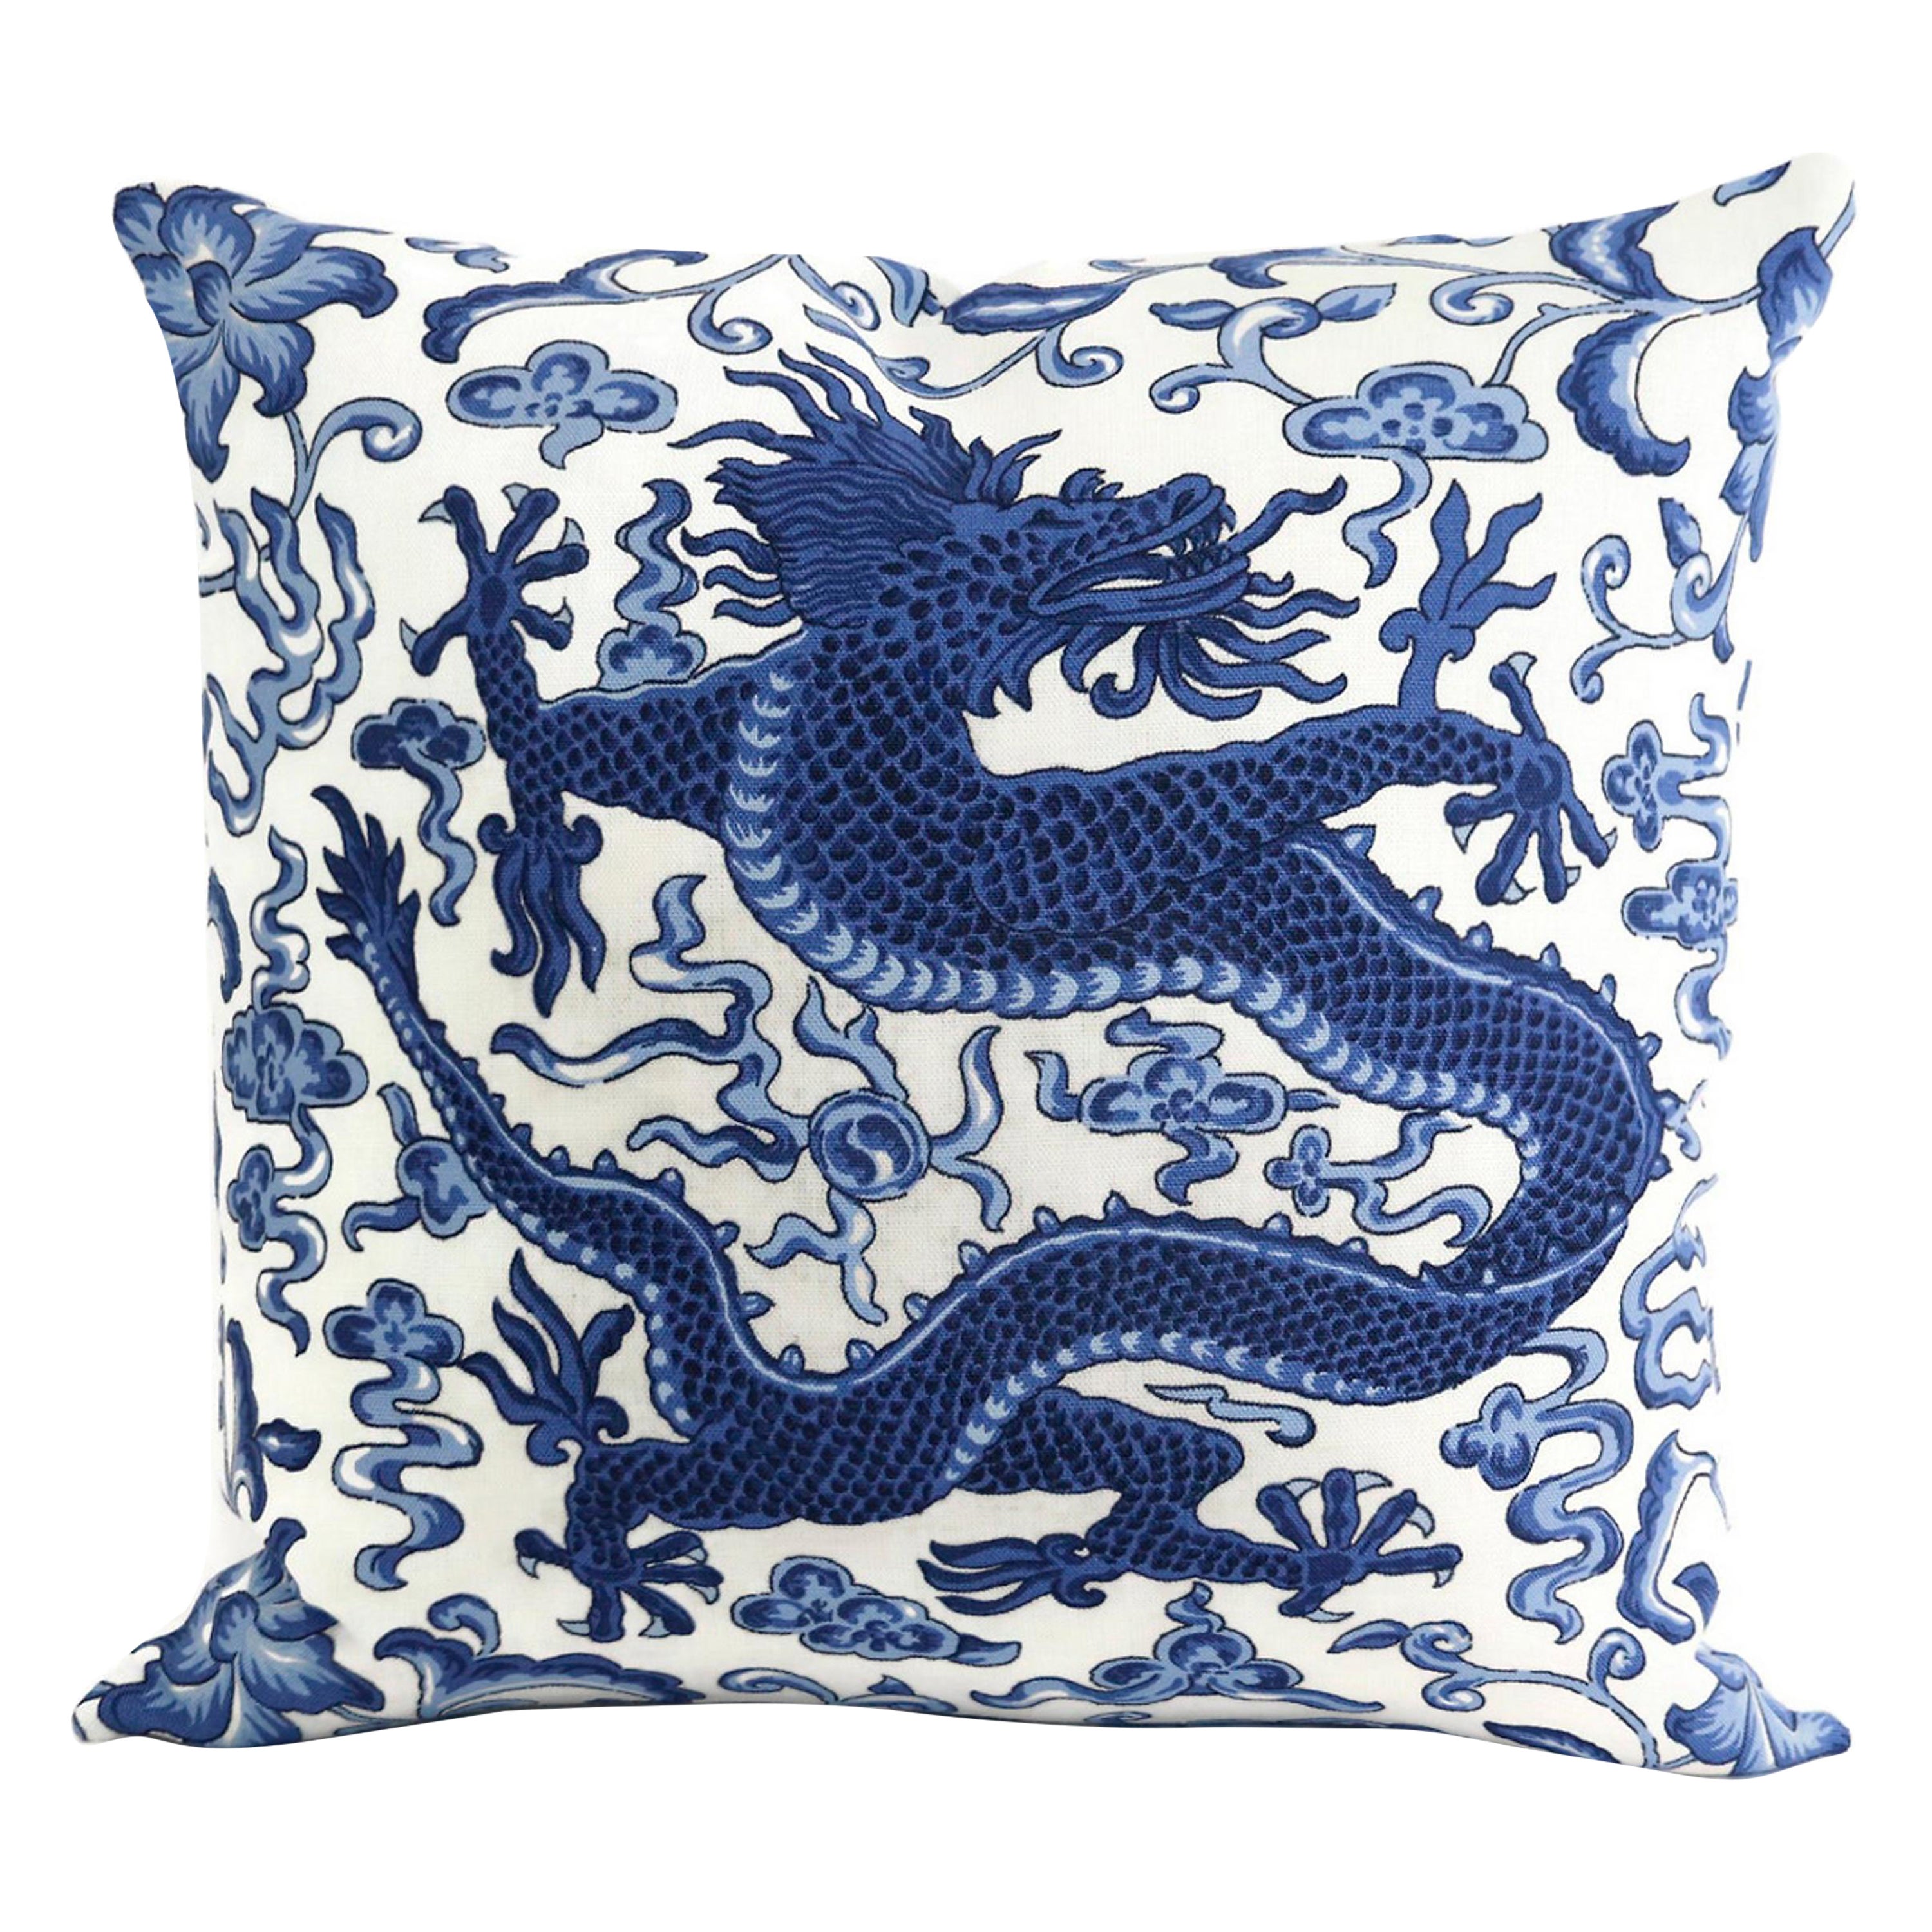 Chi'En Dragon Pillow For Sale